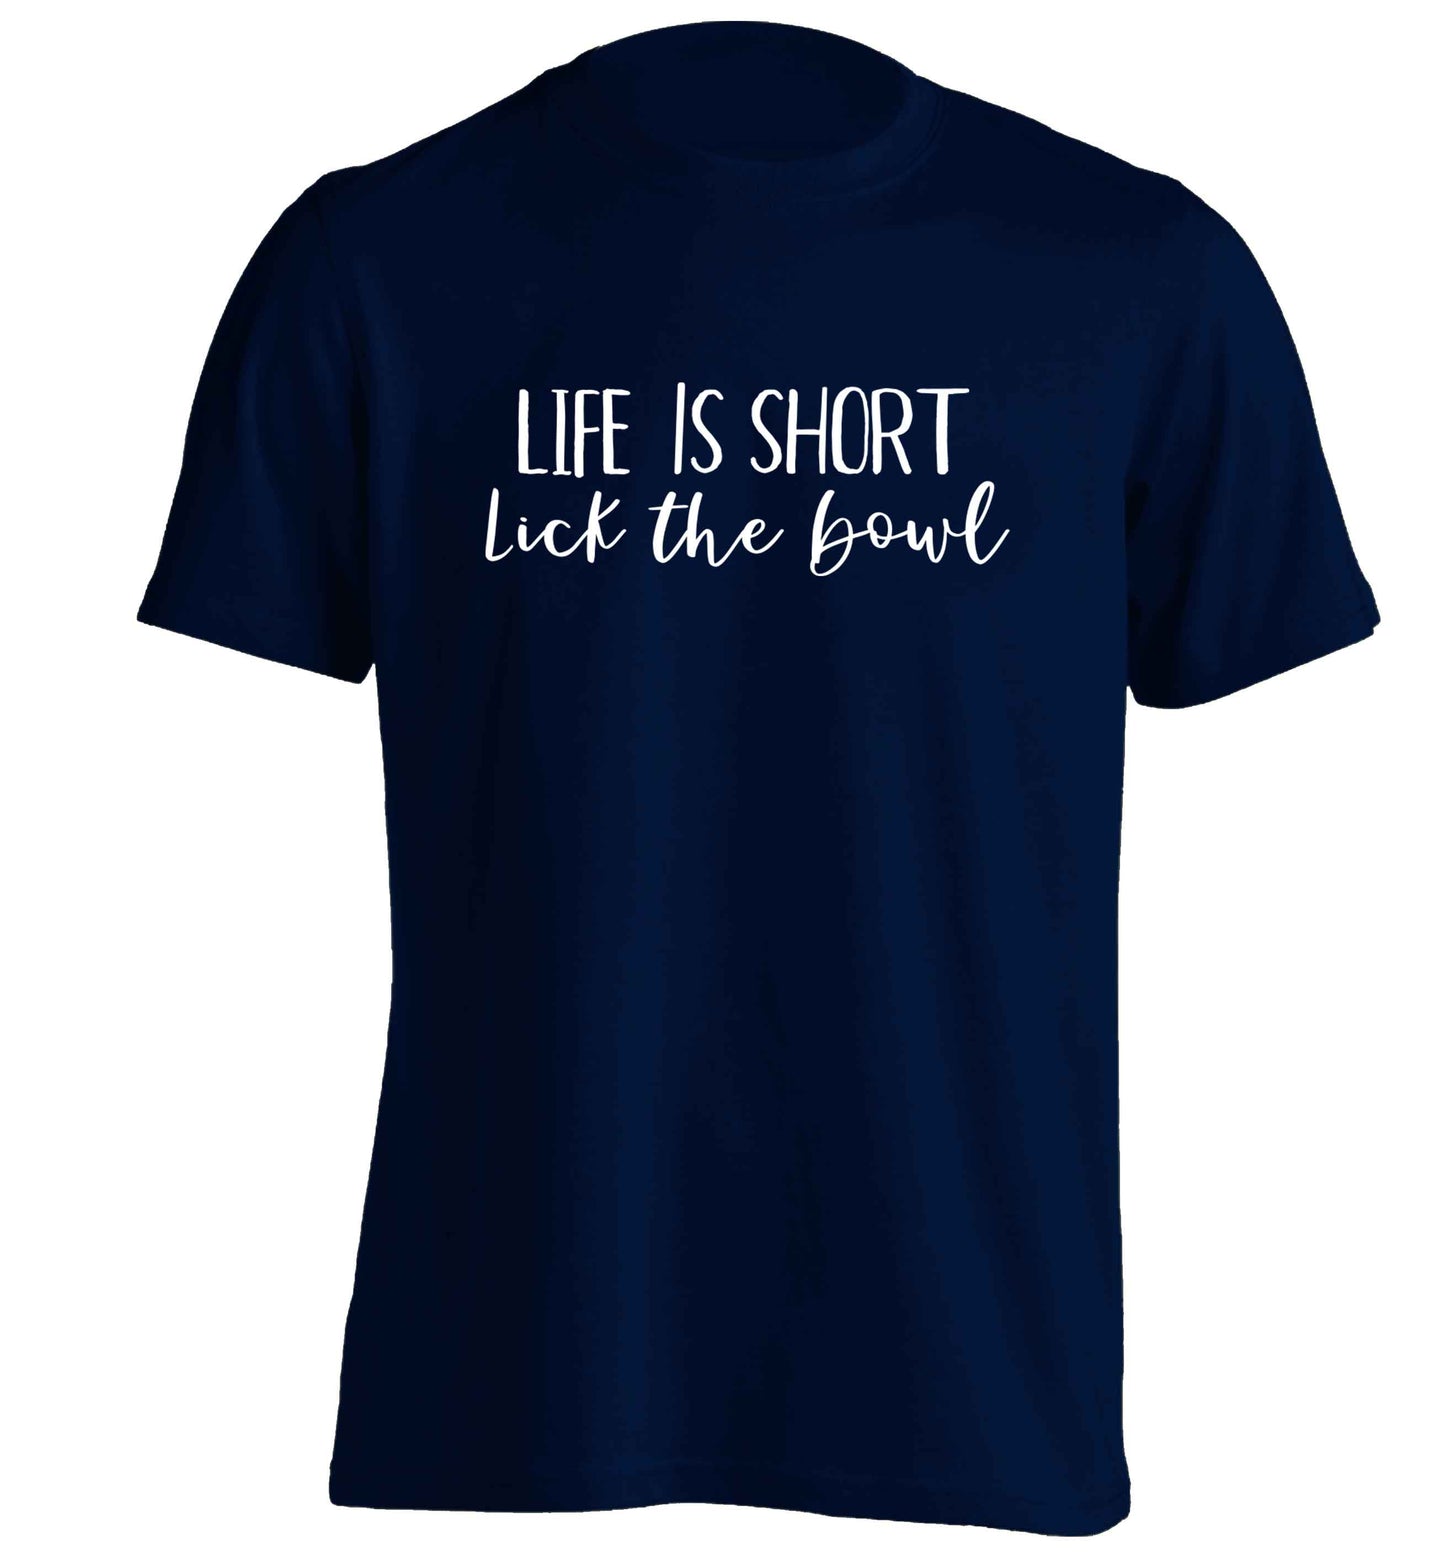 Life is short lick the bowl adults unisex navy Tshirt 2XL